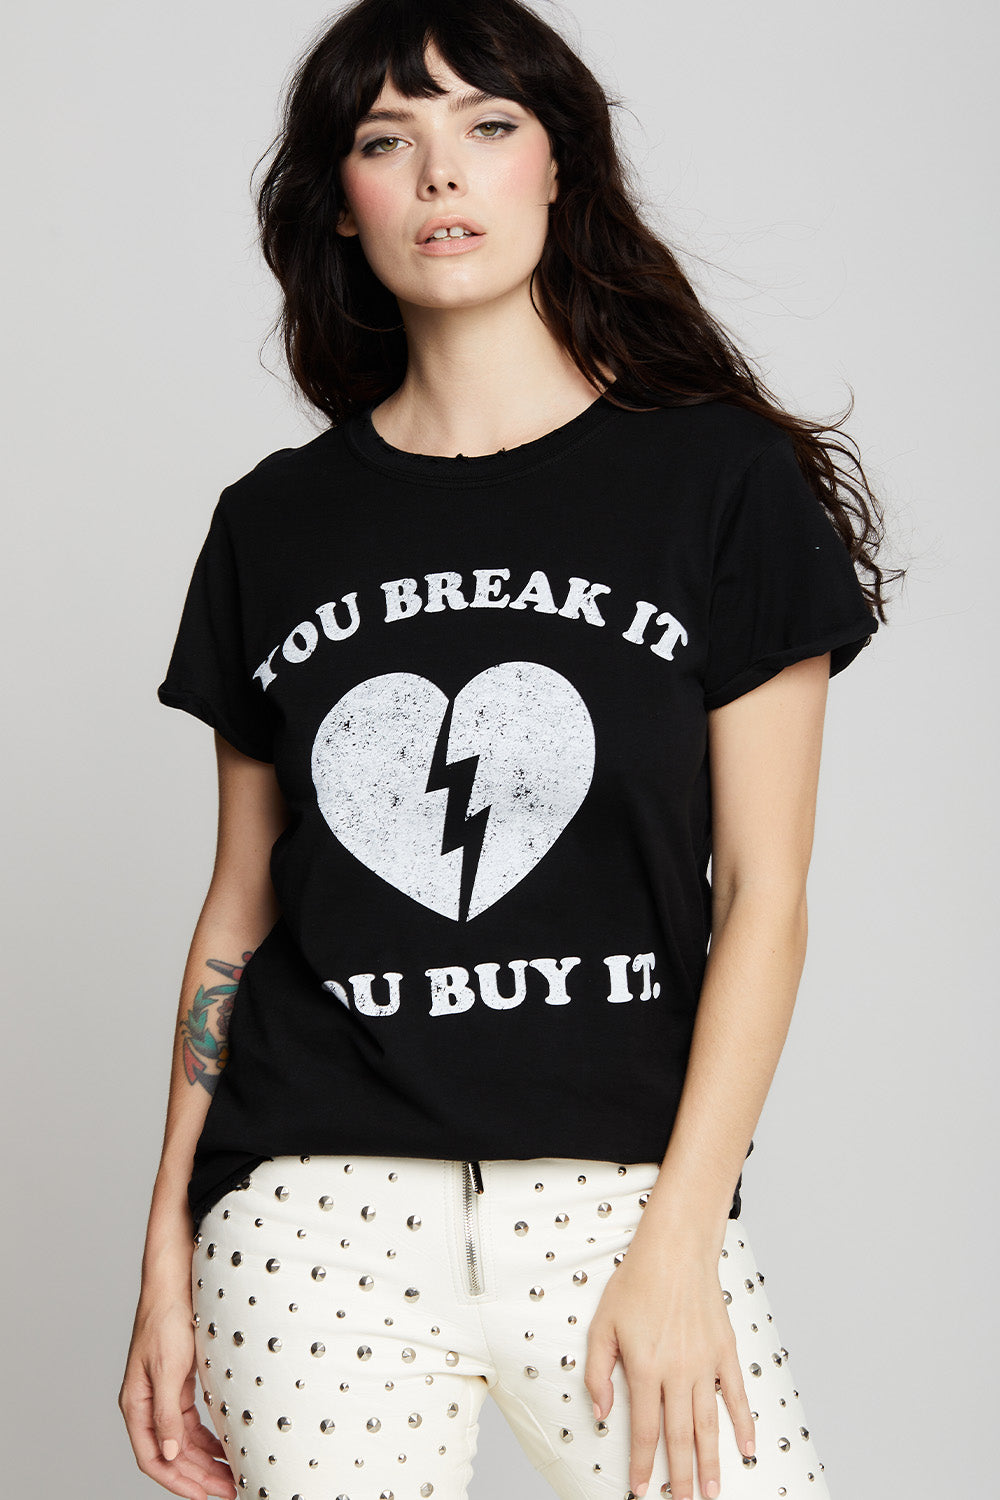 I Want to Break Free T-Shirt Dress | Recycled Karma